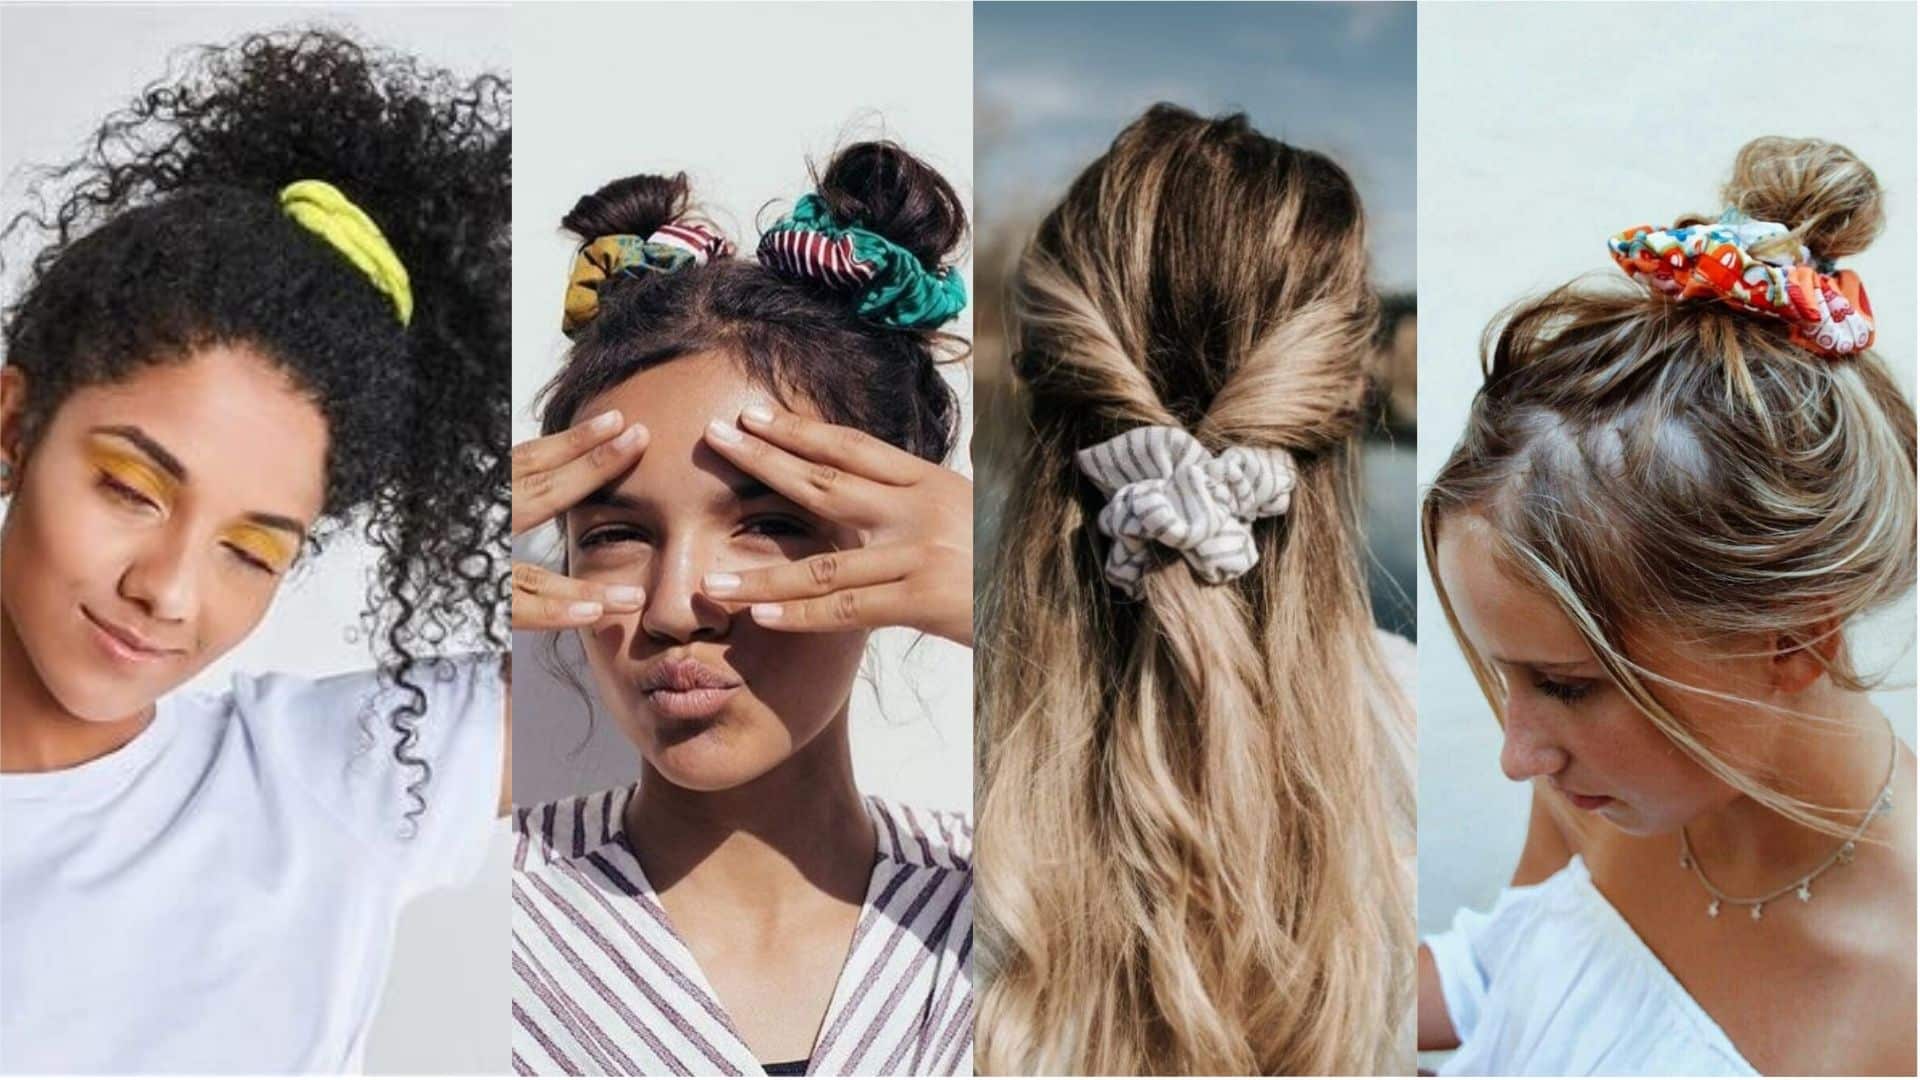 Xuxinha de cabelo, como usar? Estilos, cores e tendências